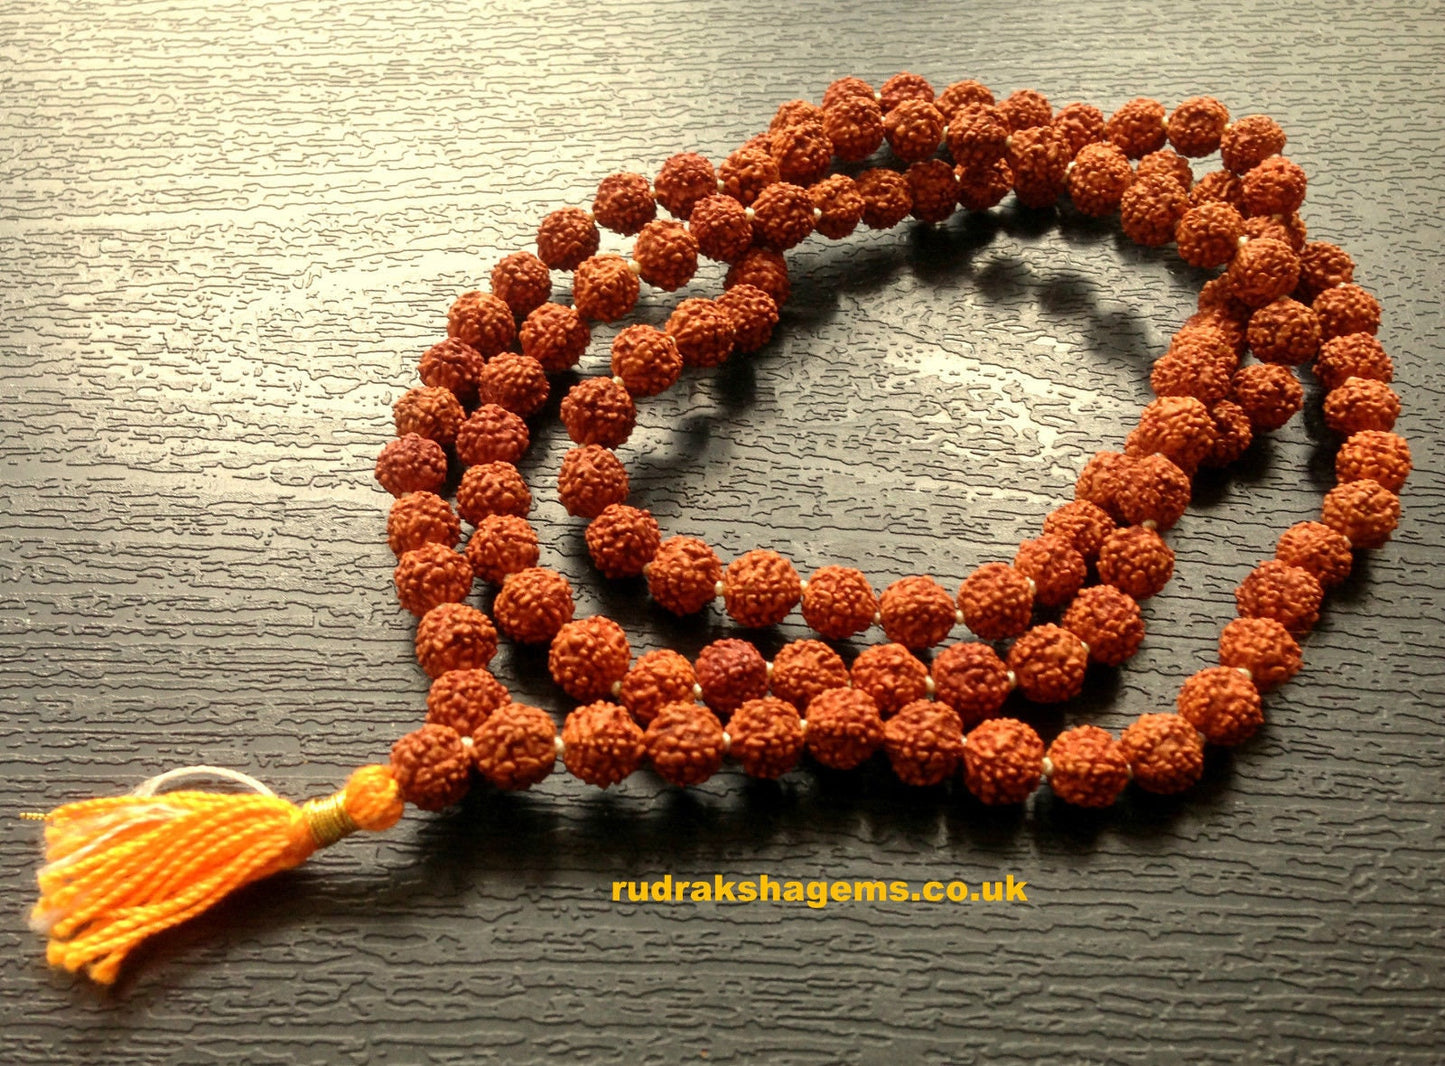 10MM Rudraksha Mala Yoga Meditation Hindu Prayer Beads 108+1 Rudraksha Beads Mala with Yellow Tassel - Rudraksh Mala - Boho Rosary Authentic